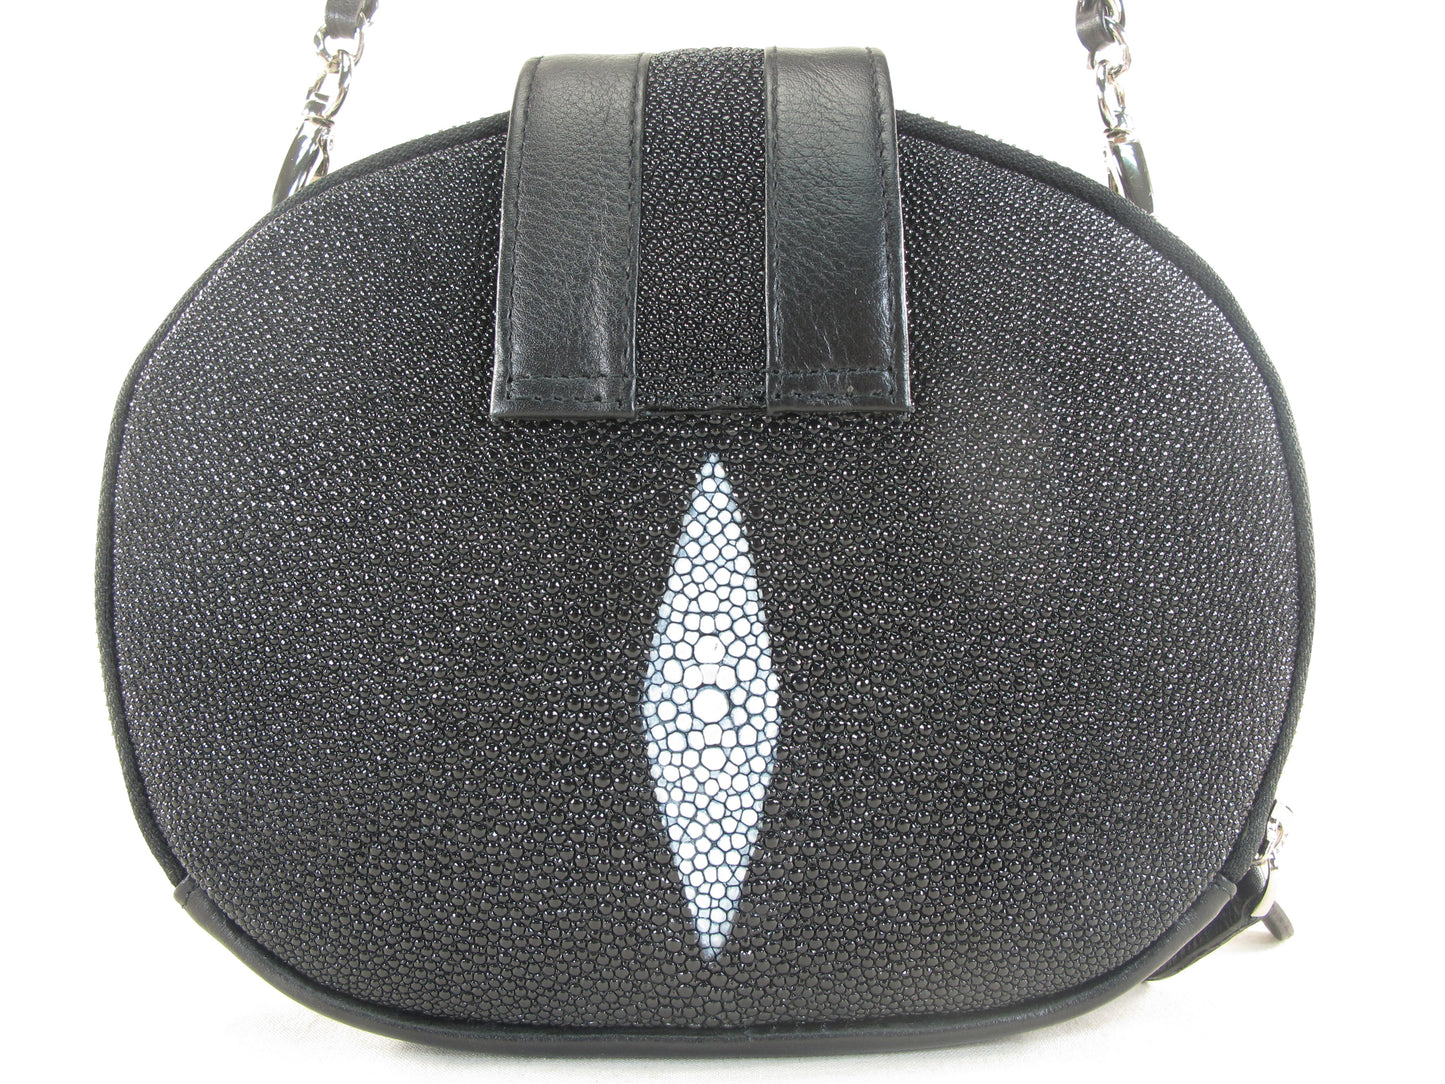 PELGIO Genuine Stingray Skin Leather Women's Double Zip Shoulder Bag Purse